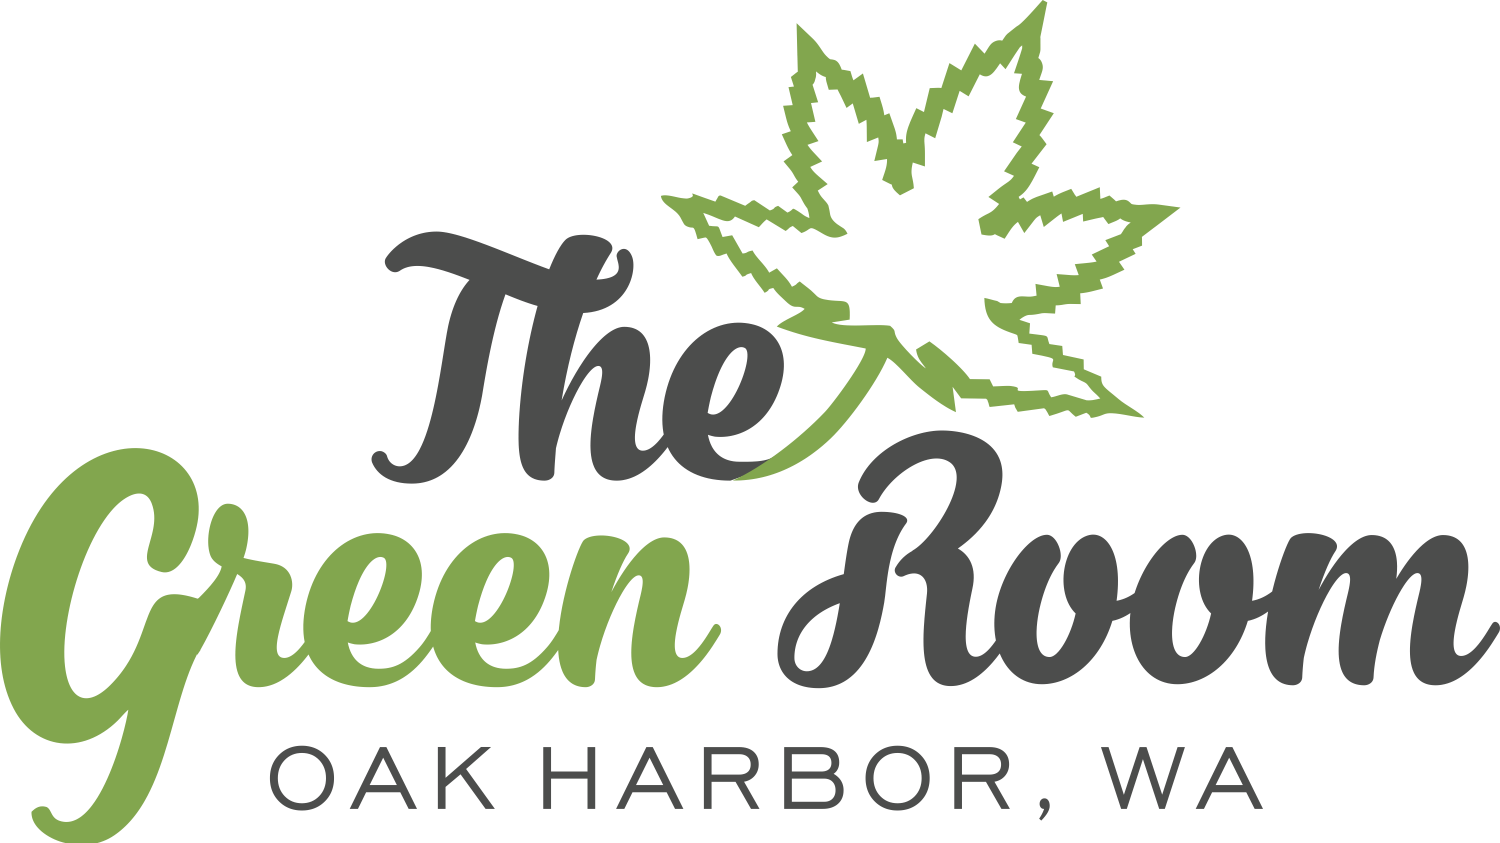 The Green Room - Oak Harbor | Oak Harbor, WA Dispensary | Leafly